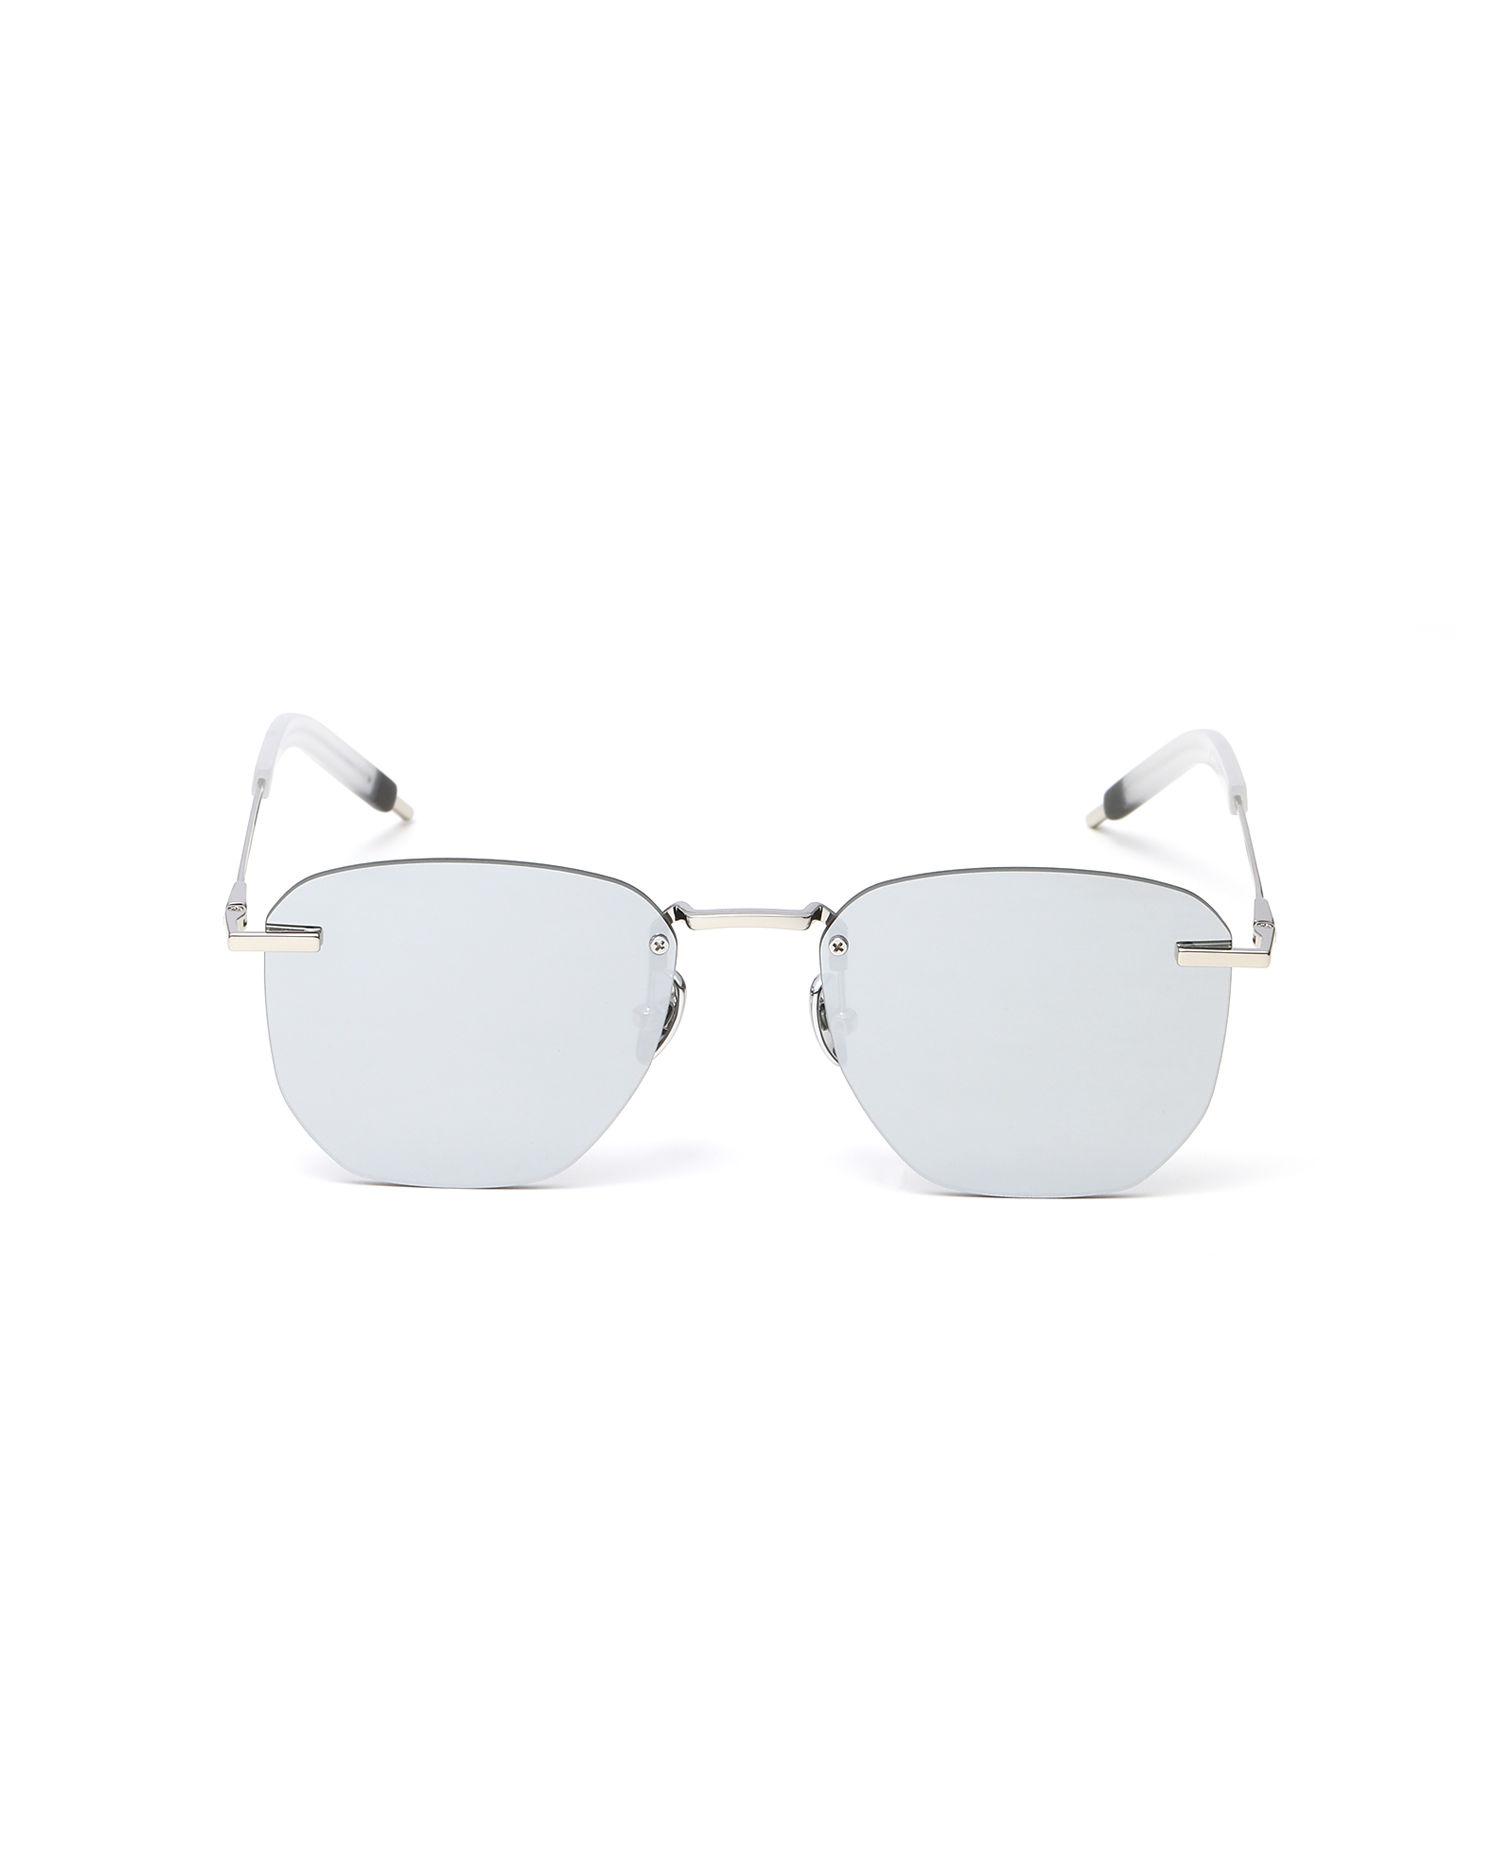 Frameless sunglasses by BIAS